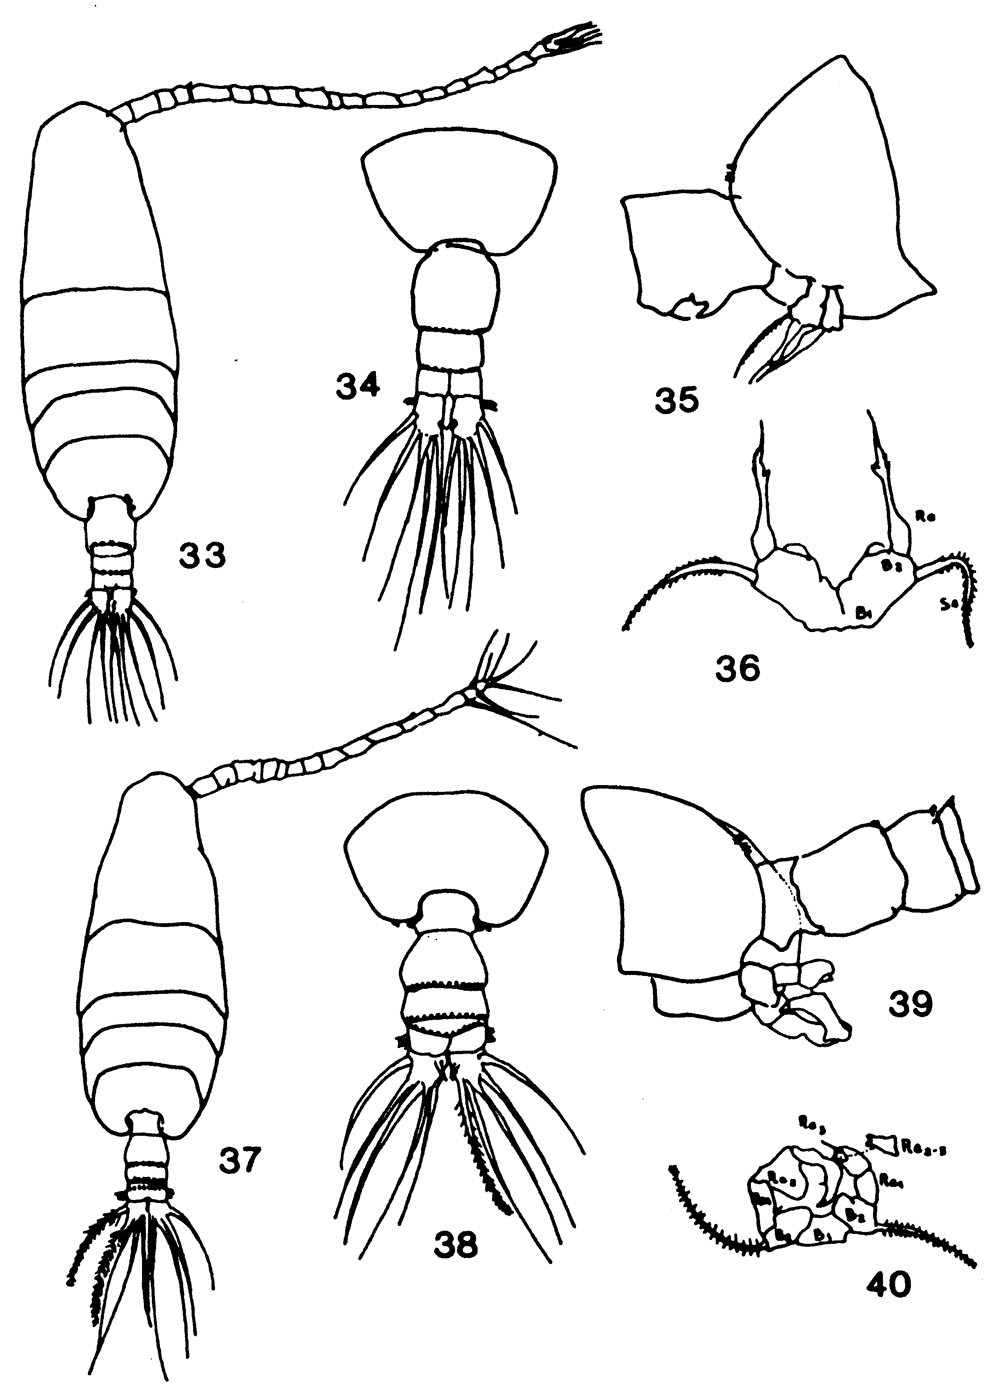 Species Acartia (Acanthacartia) tonsa - Plate 27 of morphological figures